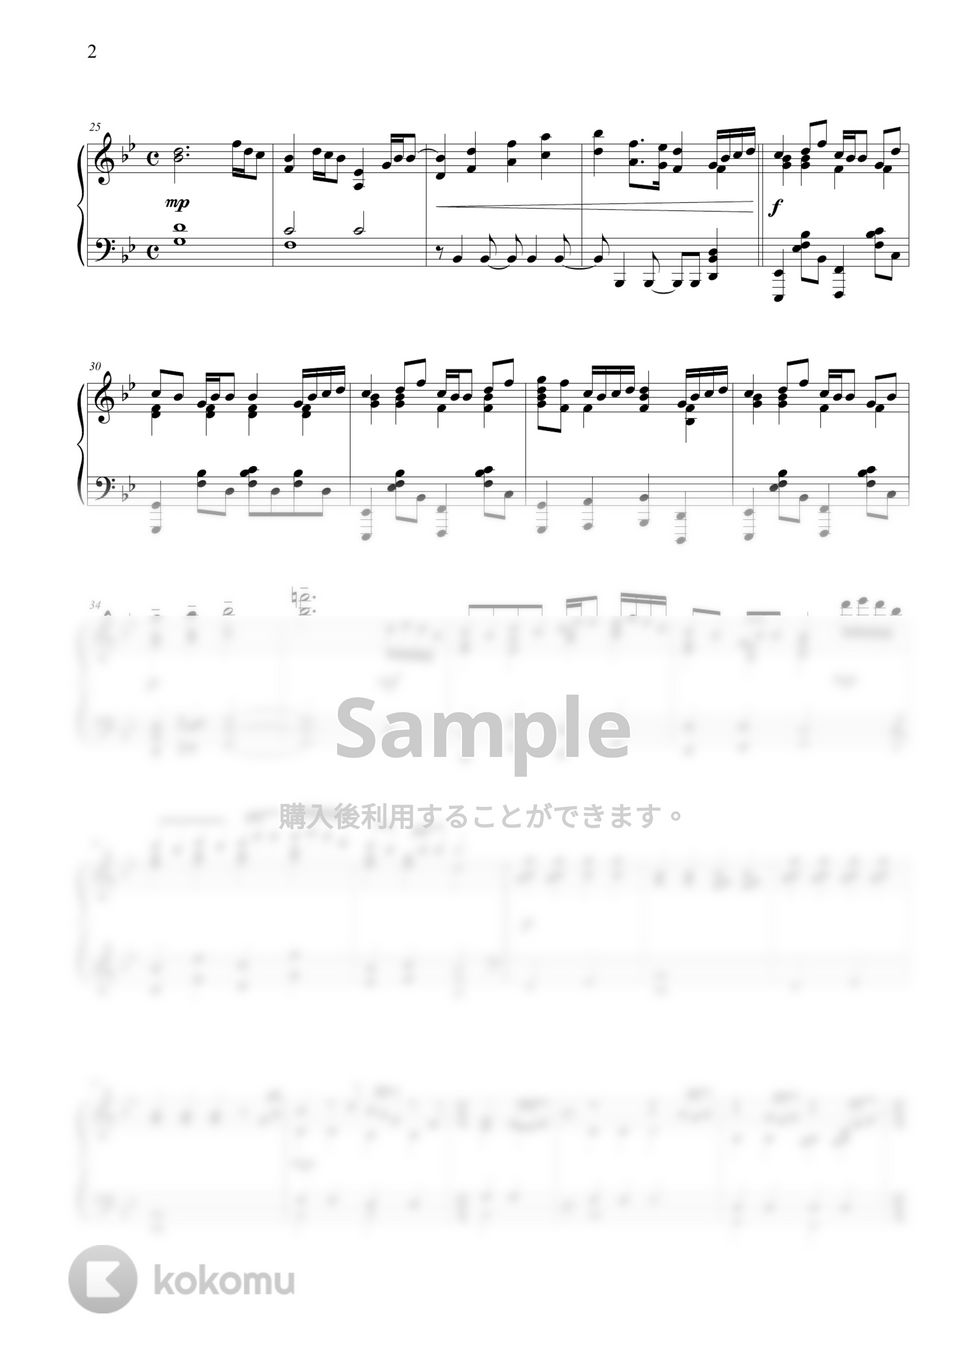 米津玄師 - 地球儀 by THIS IS PIANO